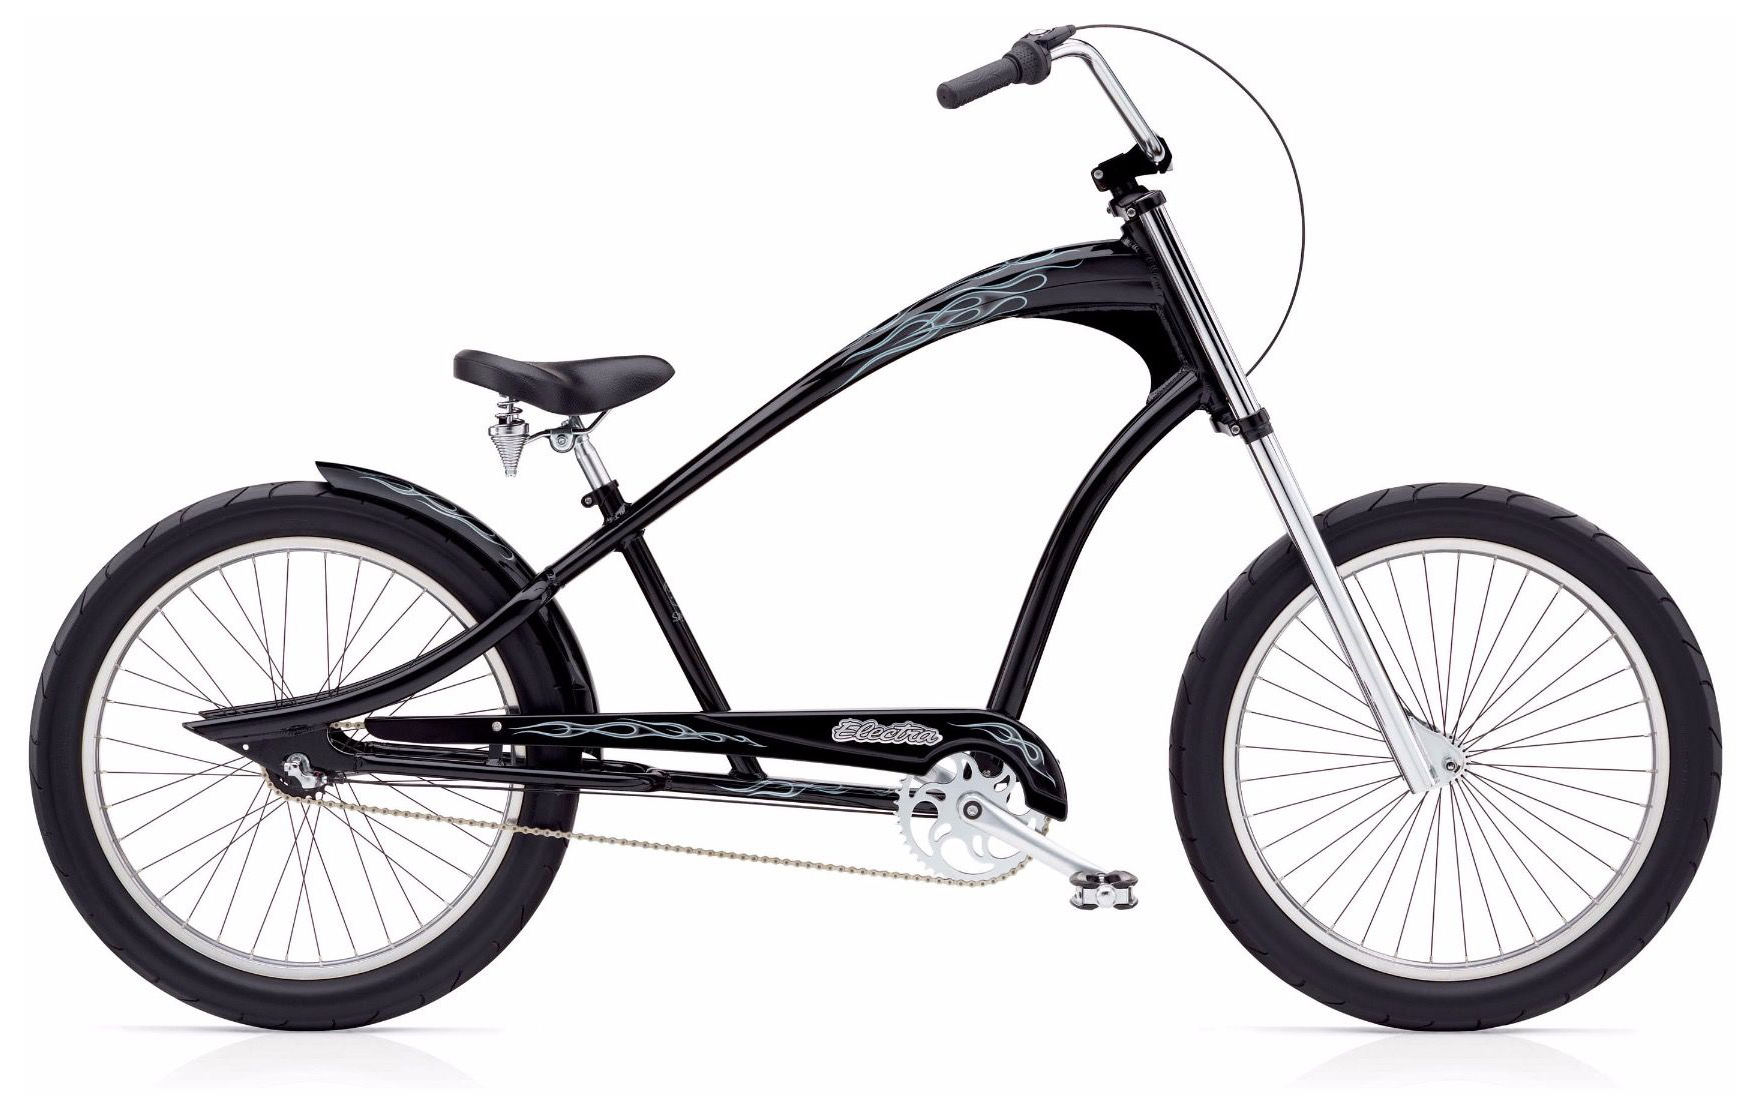  Велосипед Electra Ghostrider 3i 2019